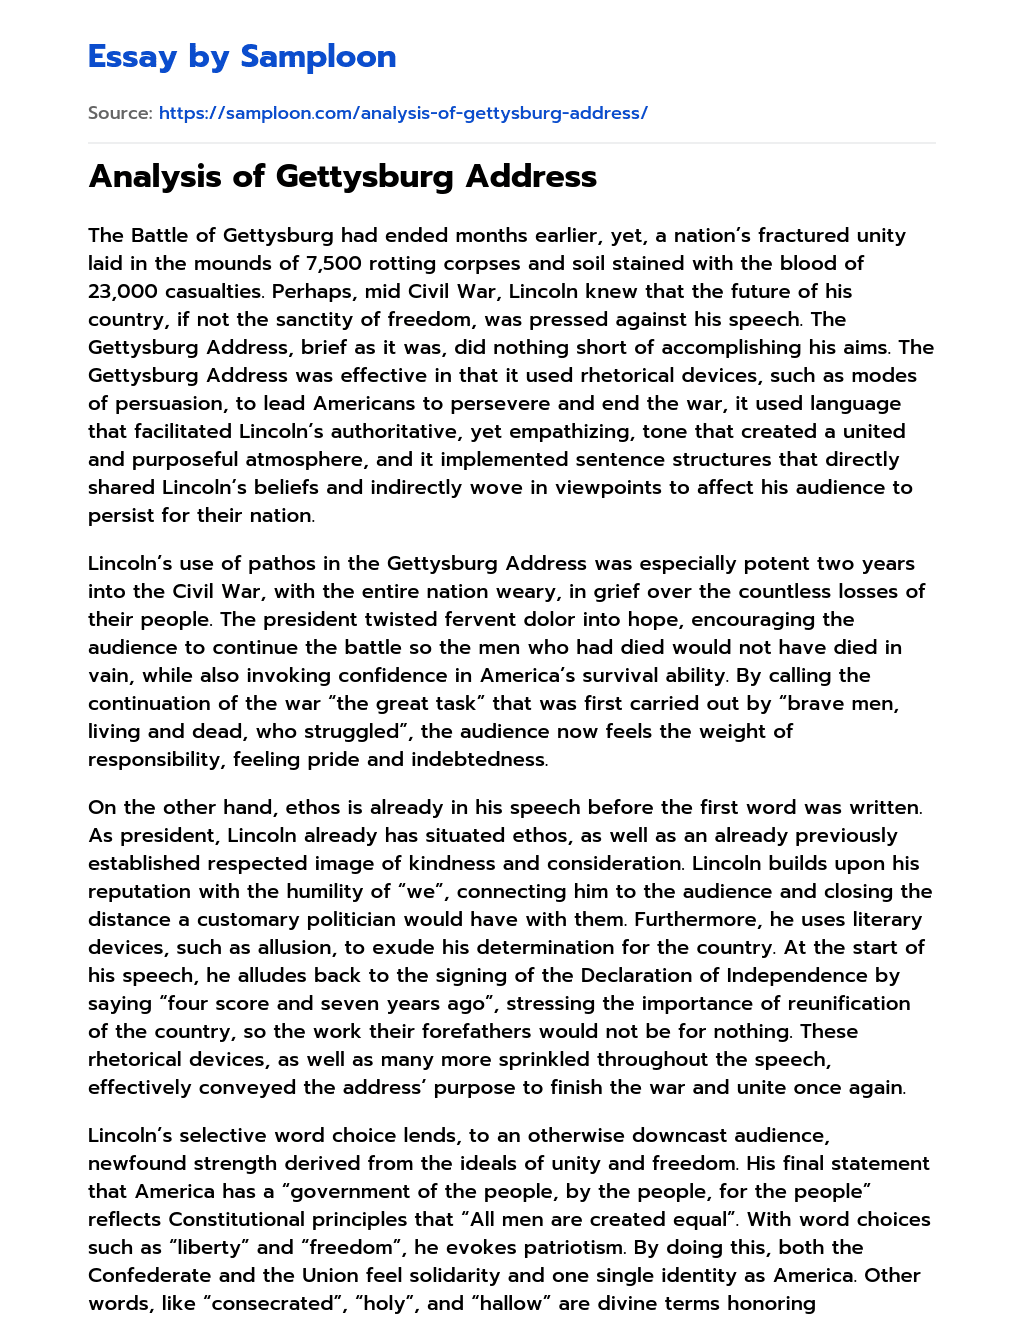 Analysis of Gettysburg Address essay